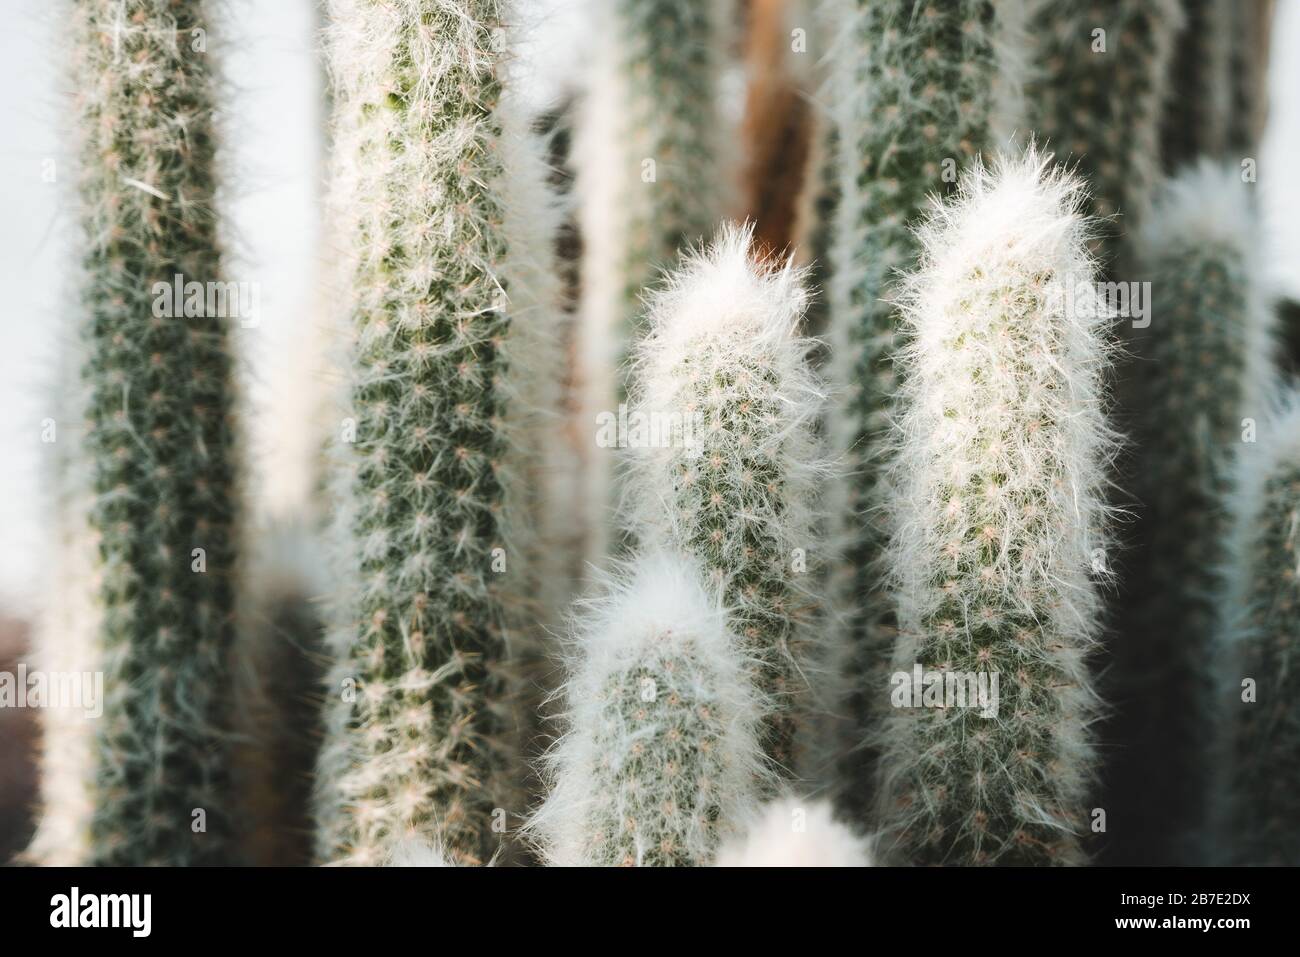 Peruvian Columnar Cactus Species: Peruvian Old Man or Cotton Ball or Snowball Cactus or Wooly Espostoa (Espostoa Lanata var. Sericata) Stock Photo